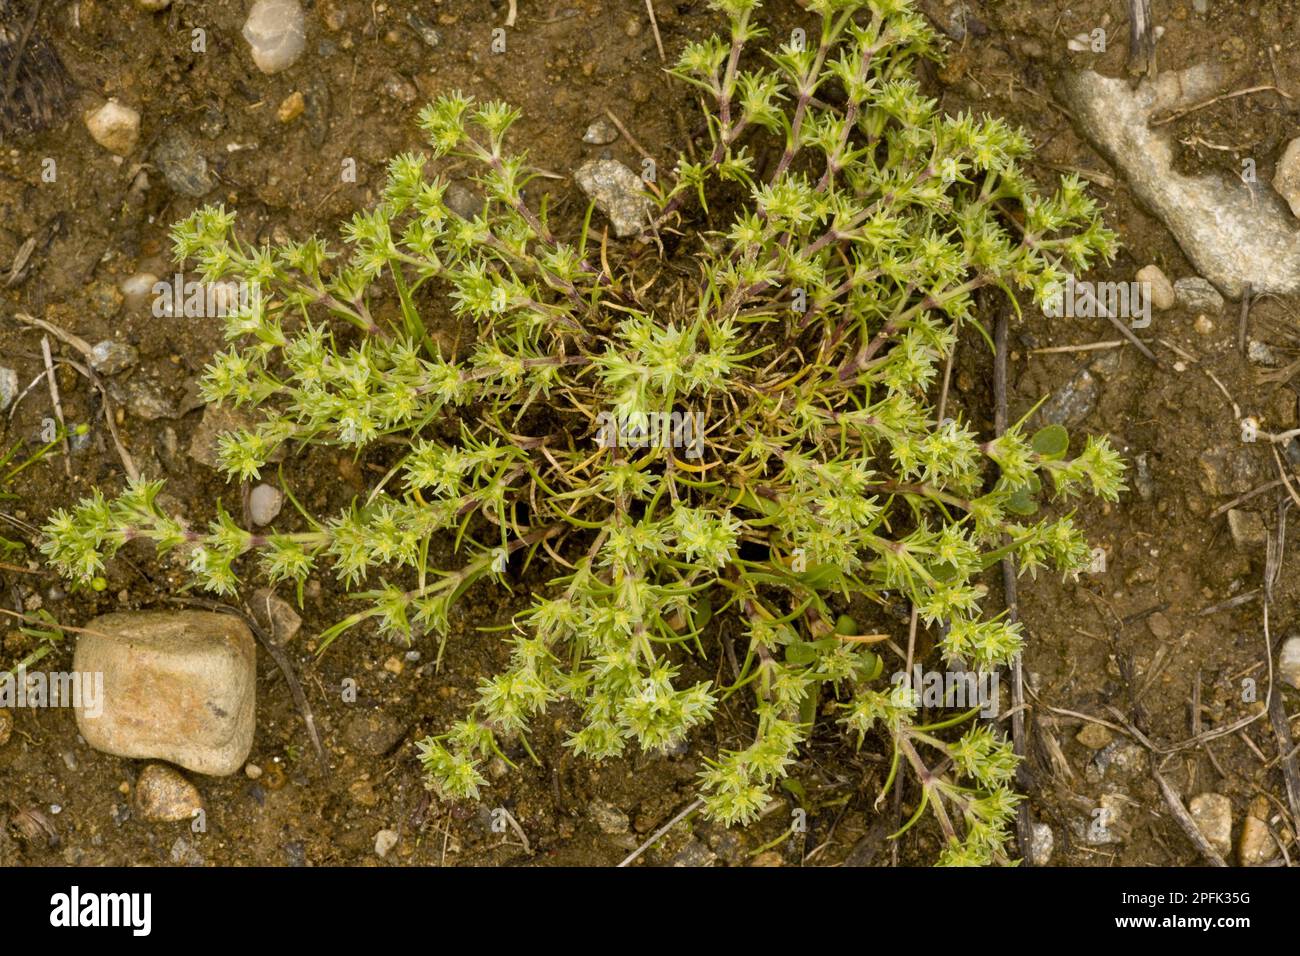 Annual knawel (Scleranthus annuus), Clove family, Romania Stock Photo